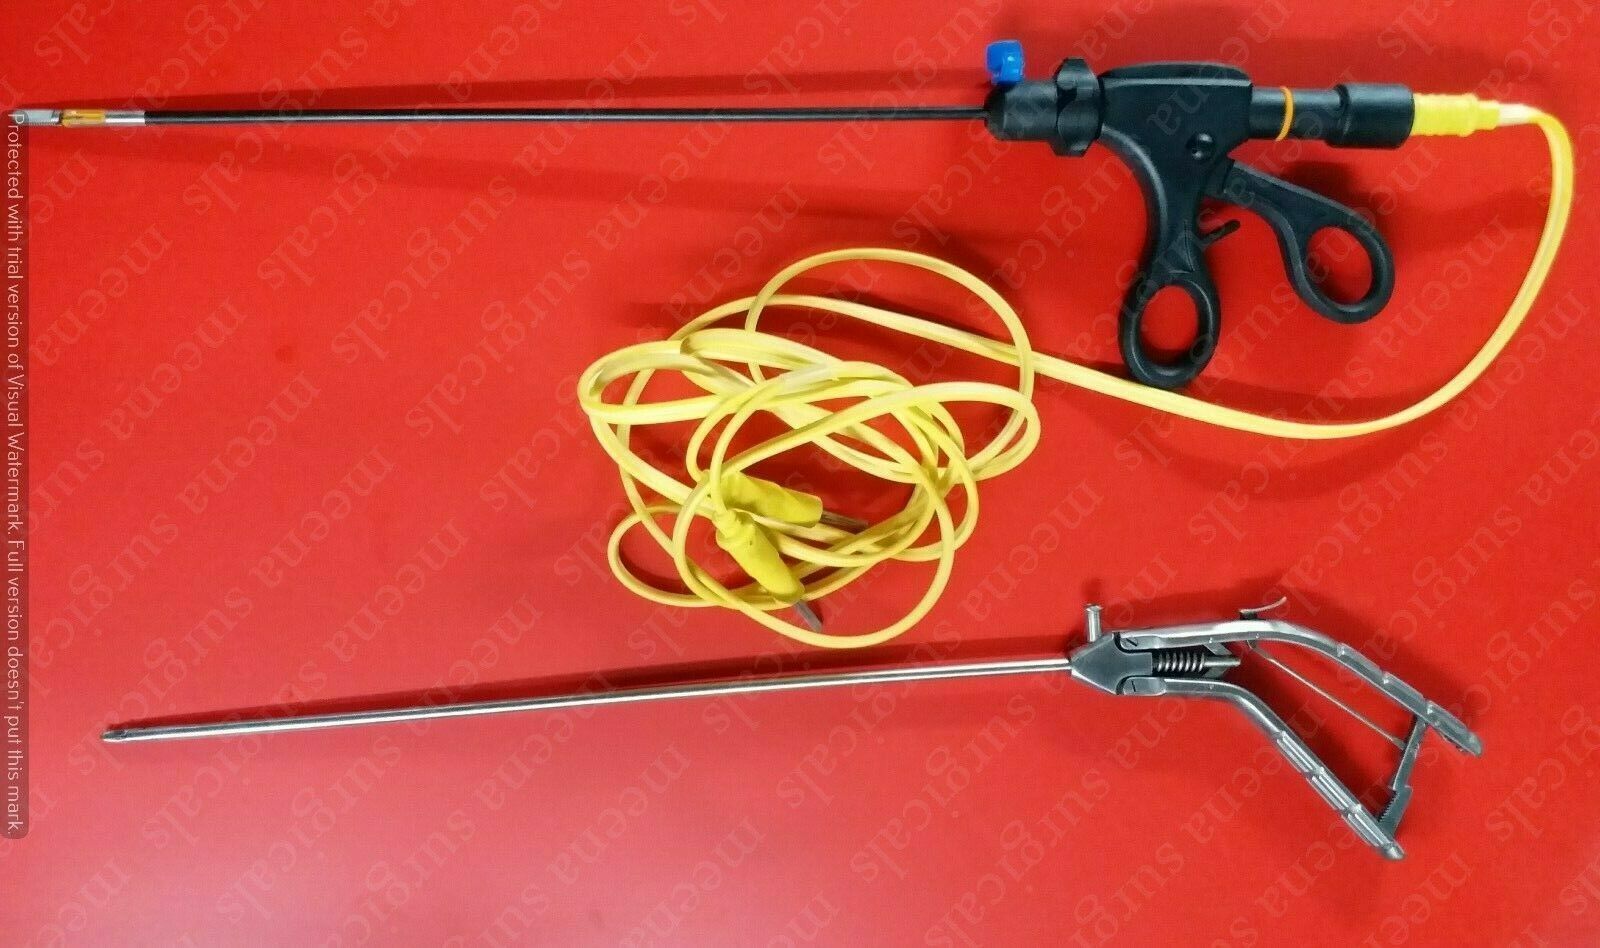 2 Laparoscopic Bipolar Roby+Cable/ Gun-Type Needle Holder 5mm x 330mm Instrument Nowy, GORĄCY